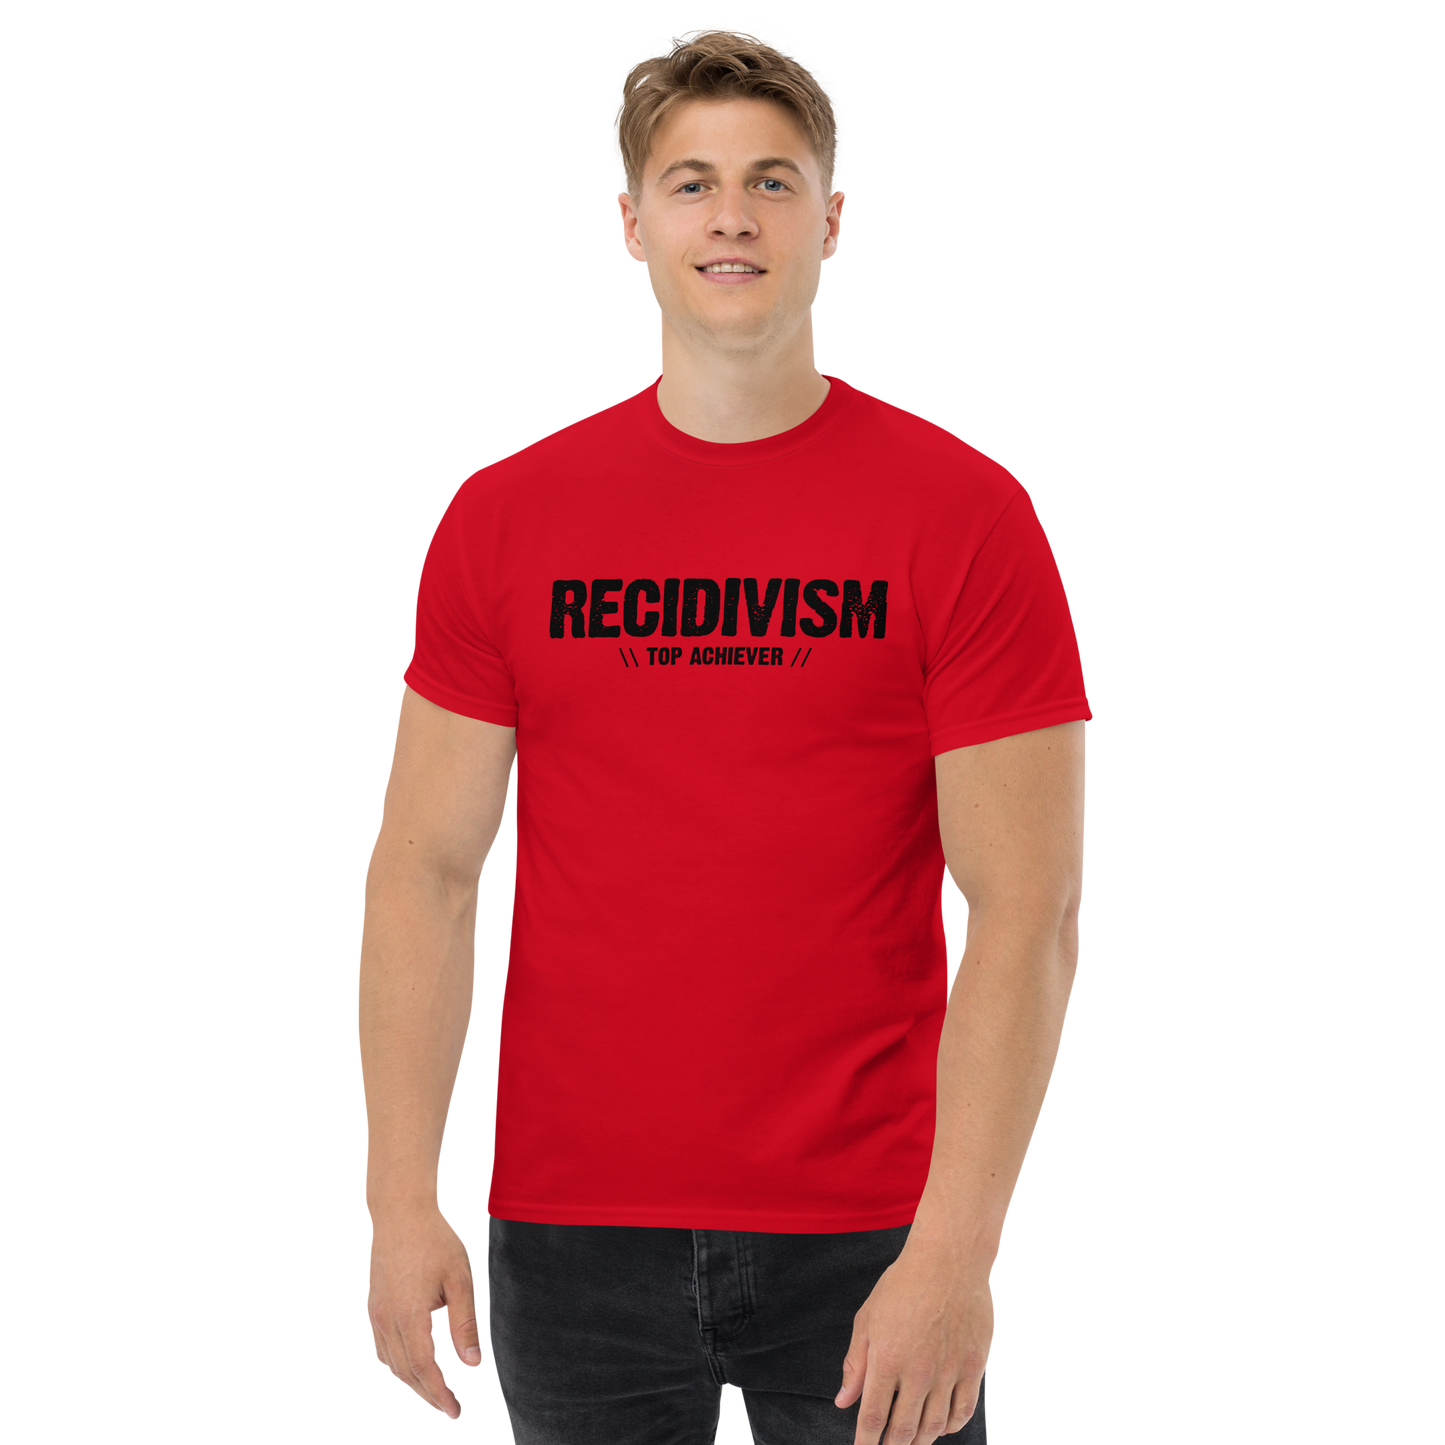 Recidivism Top Achiever - Funny T-Shirt